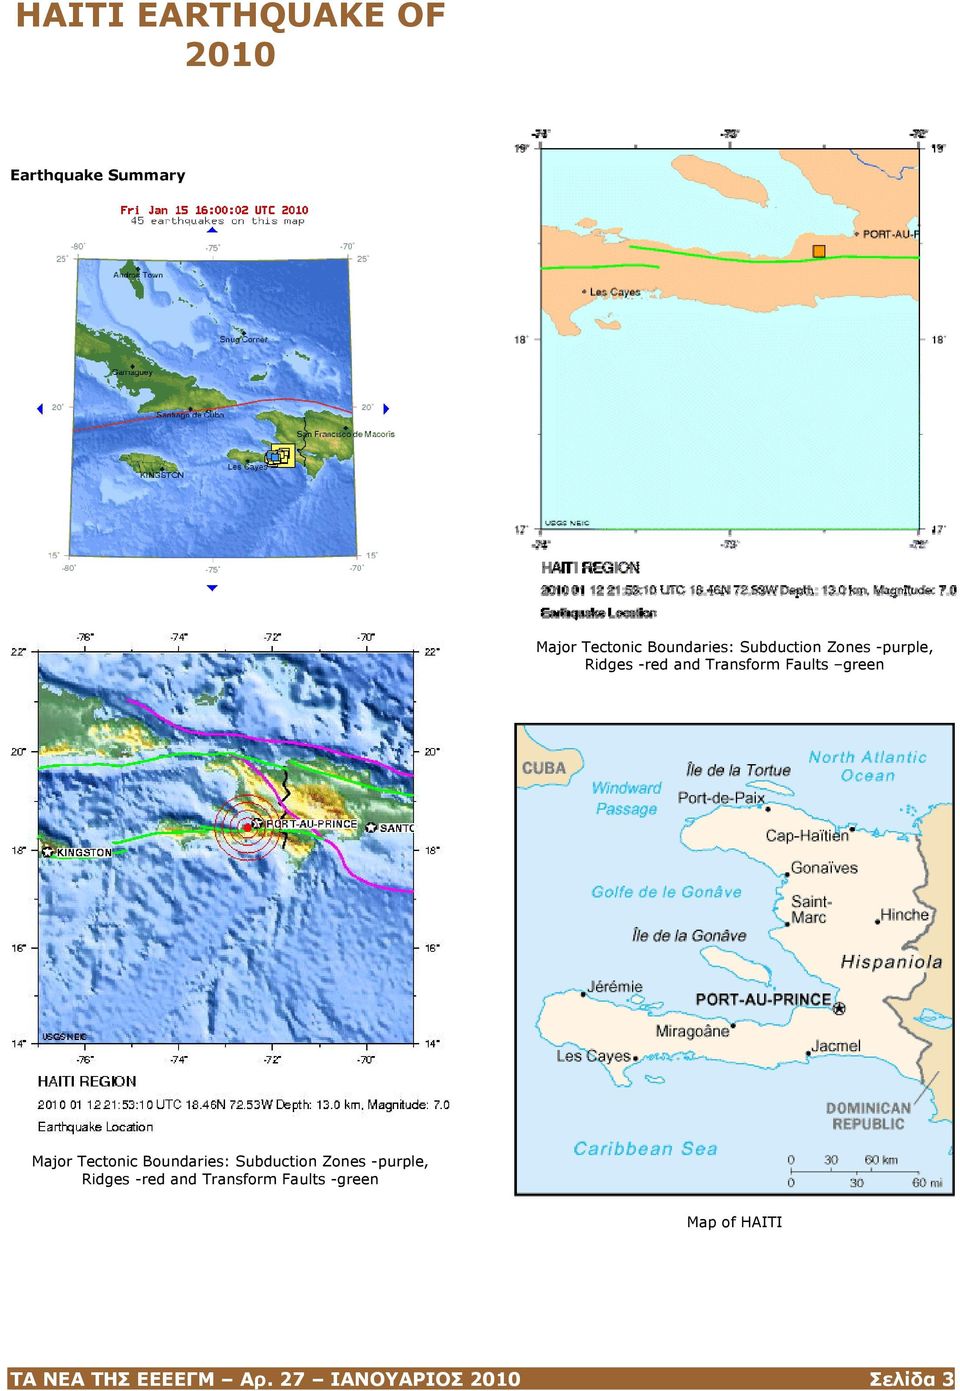 Tectonic Boundaries: Subduction Zones -purple, Ridges -red and Transform